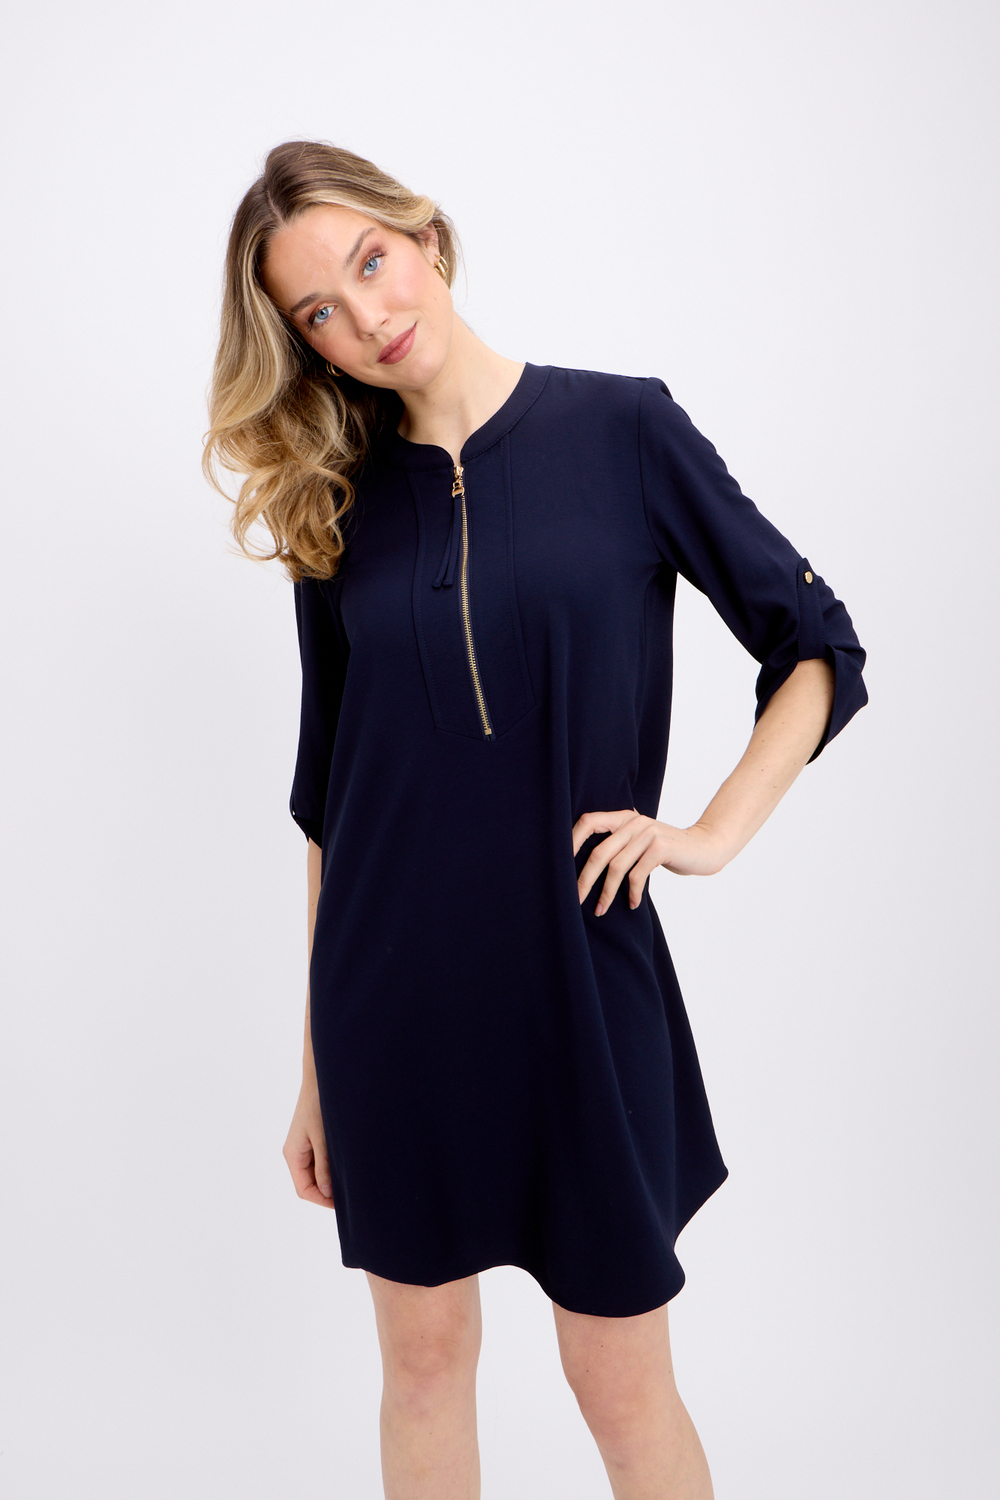 Decorative Zip Dress Style 232201. Midnight Blue